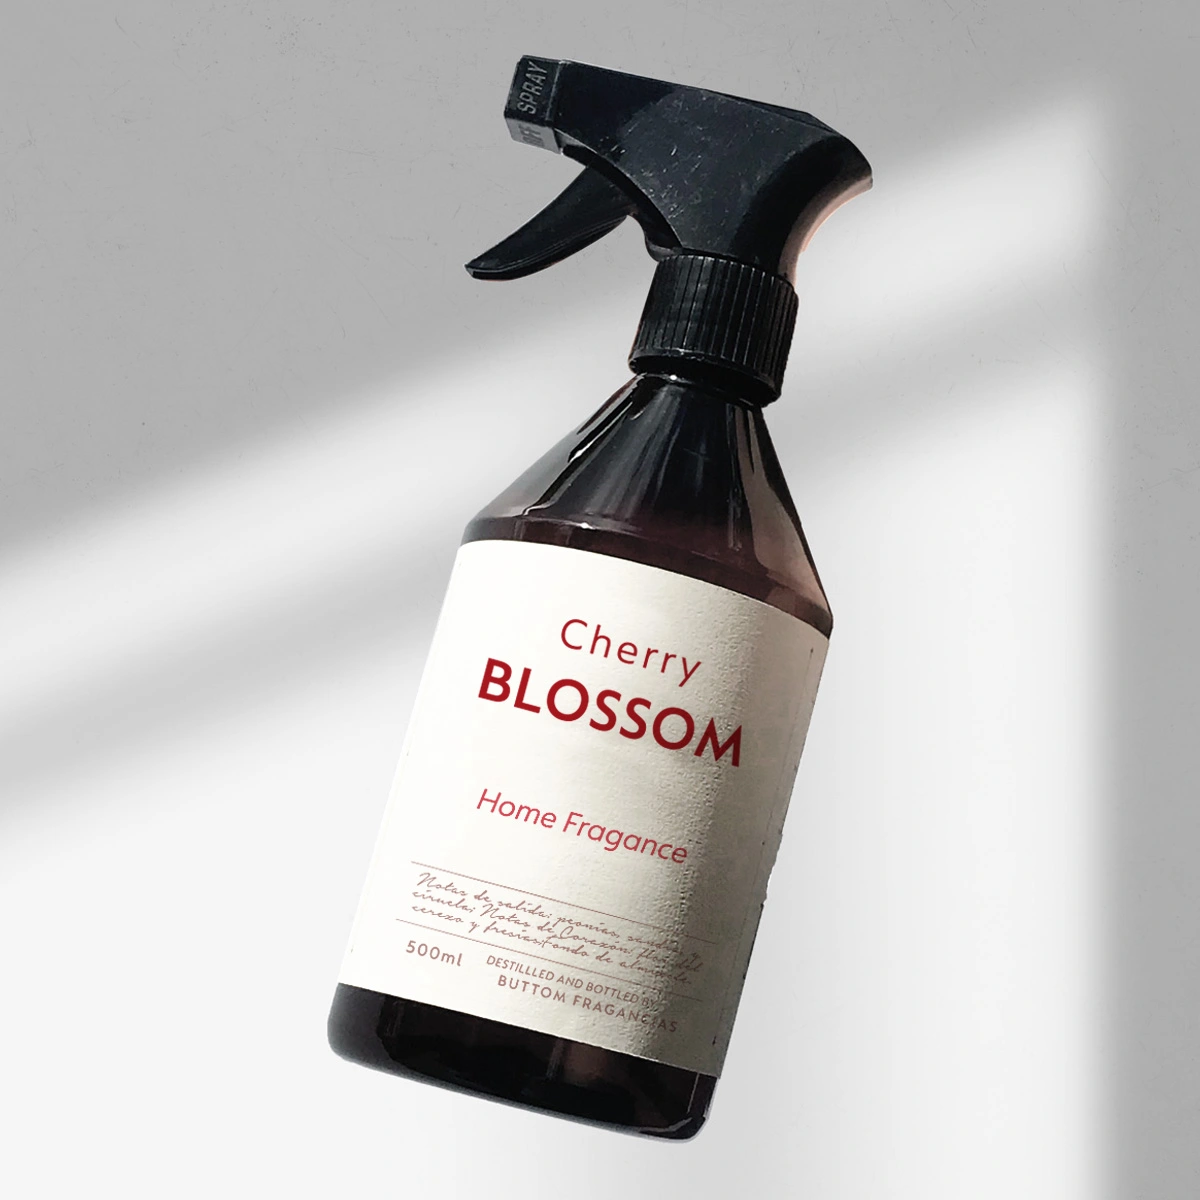 Cherry-Blossom-500ml-Buttom-Fragancias